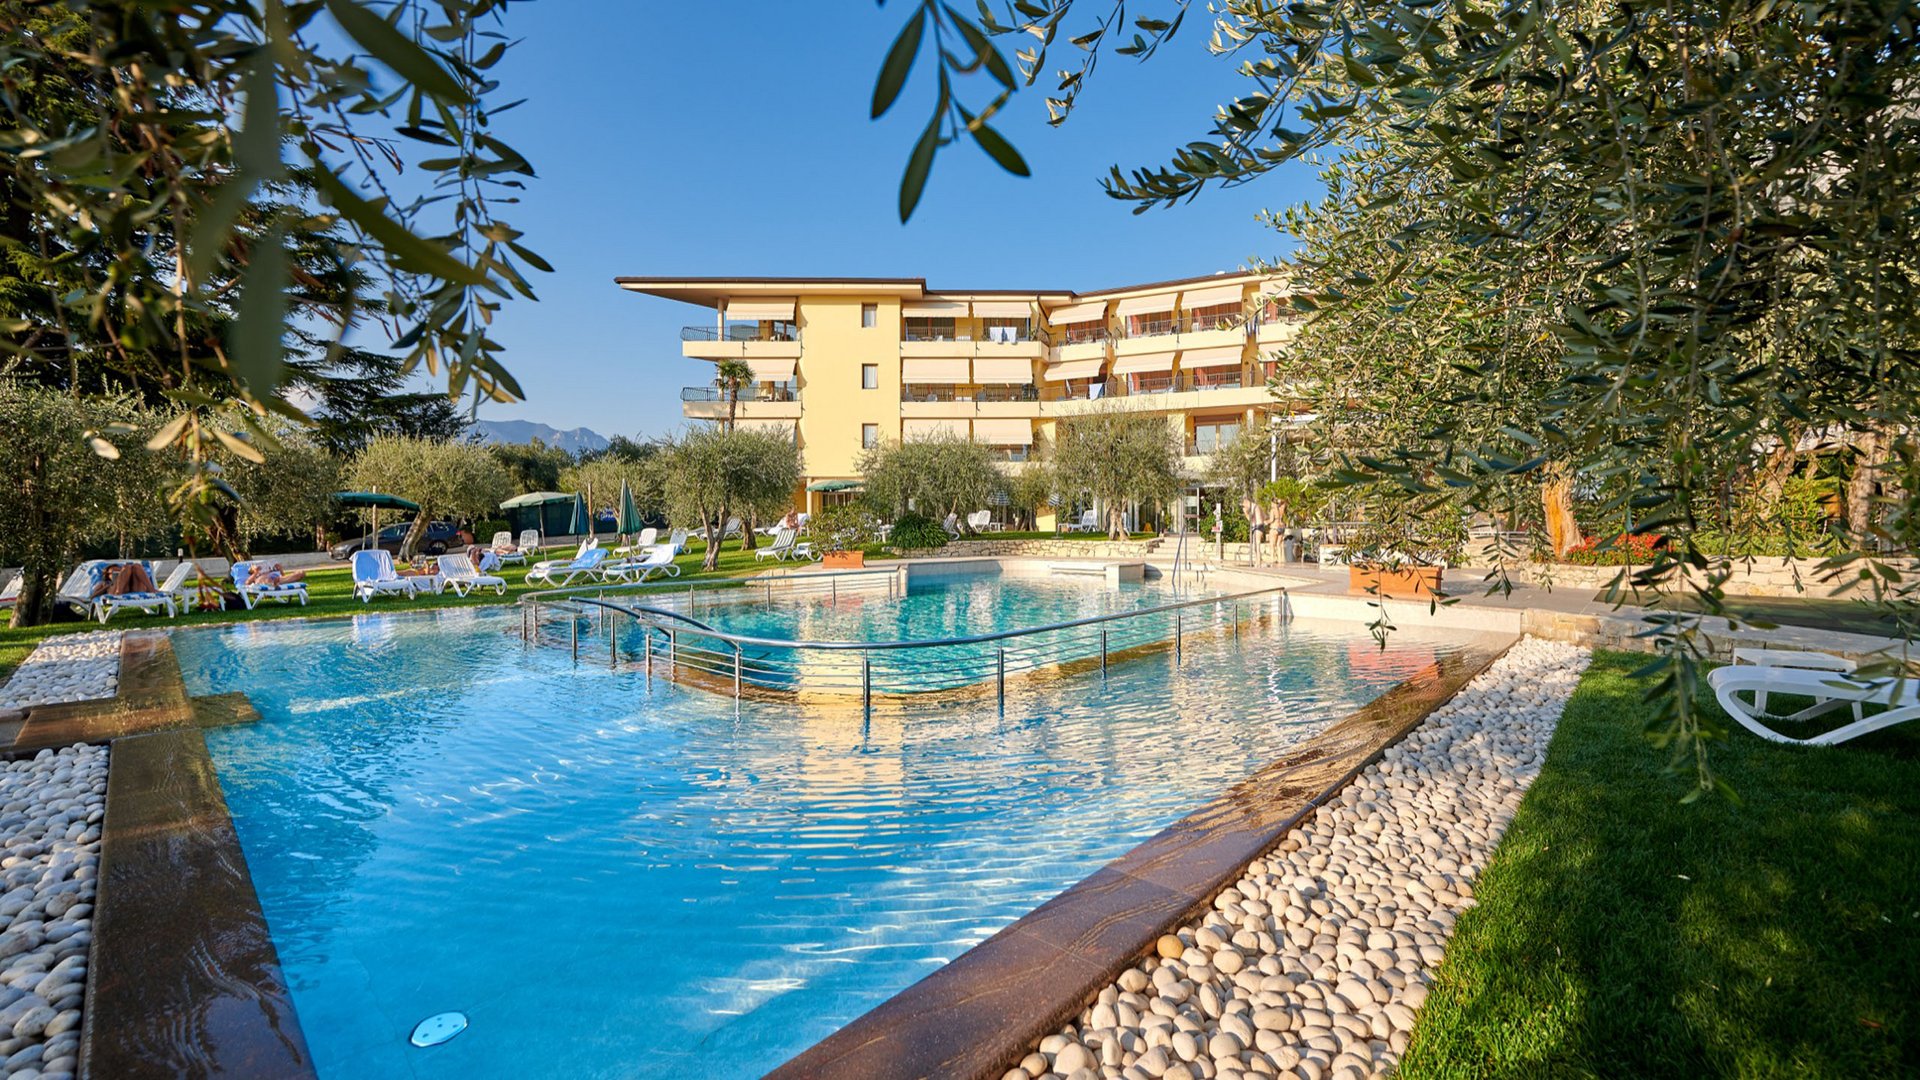 Hotel Lake Suites Baia Verde in Malcesine on Lake Garda